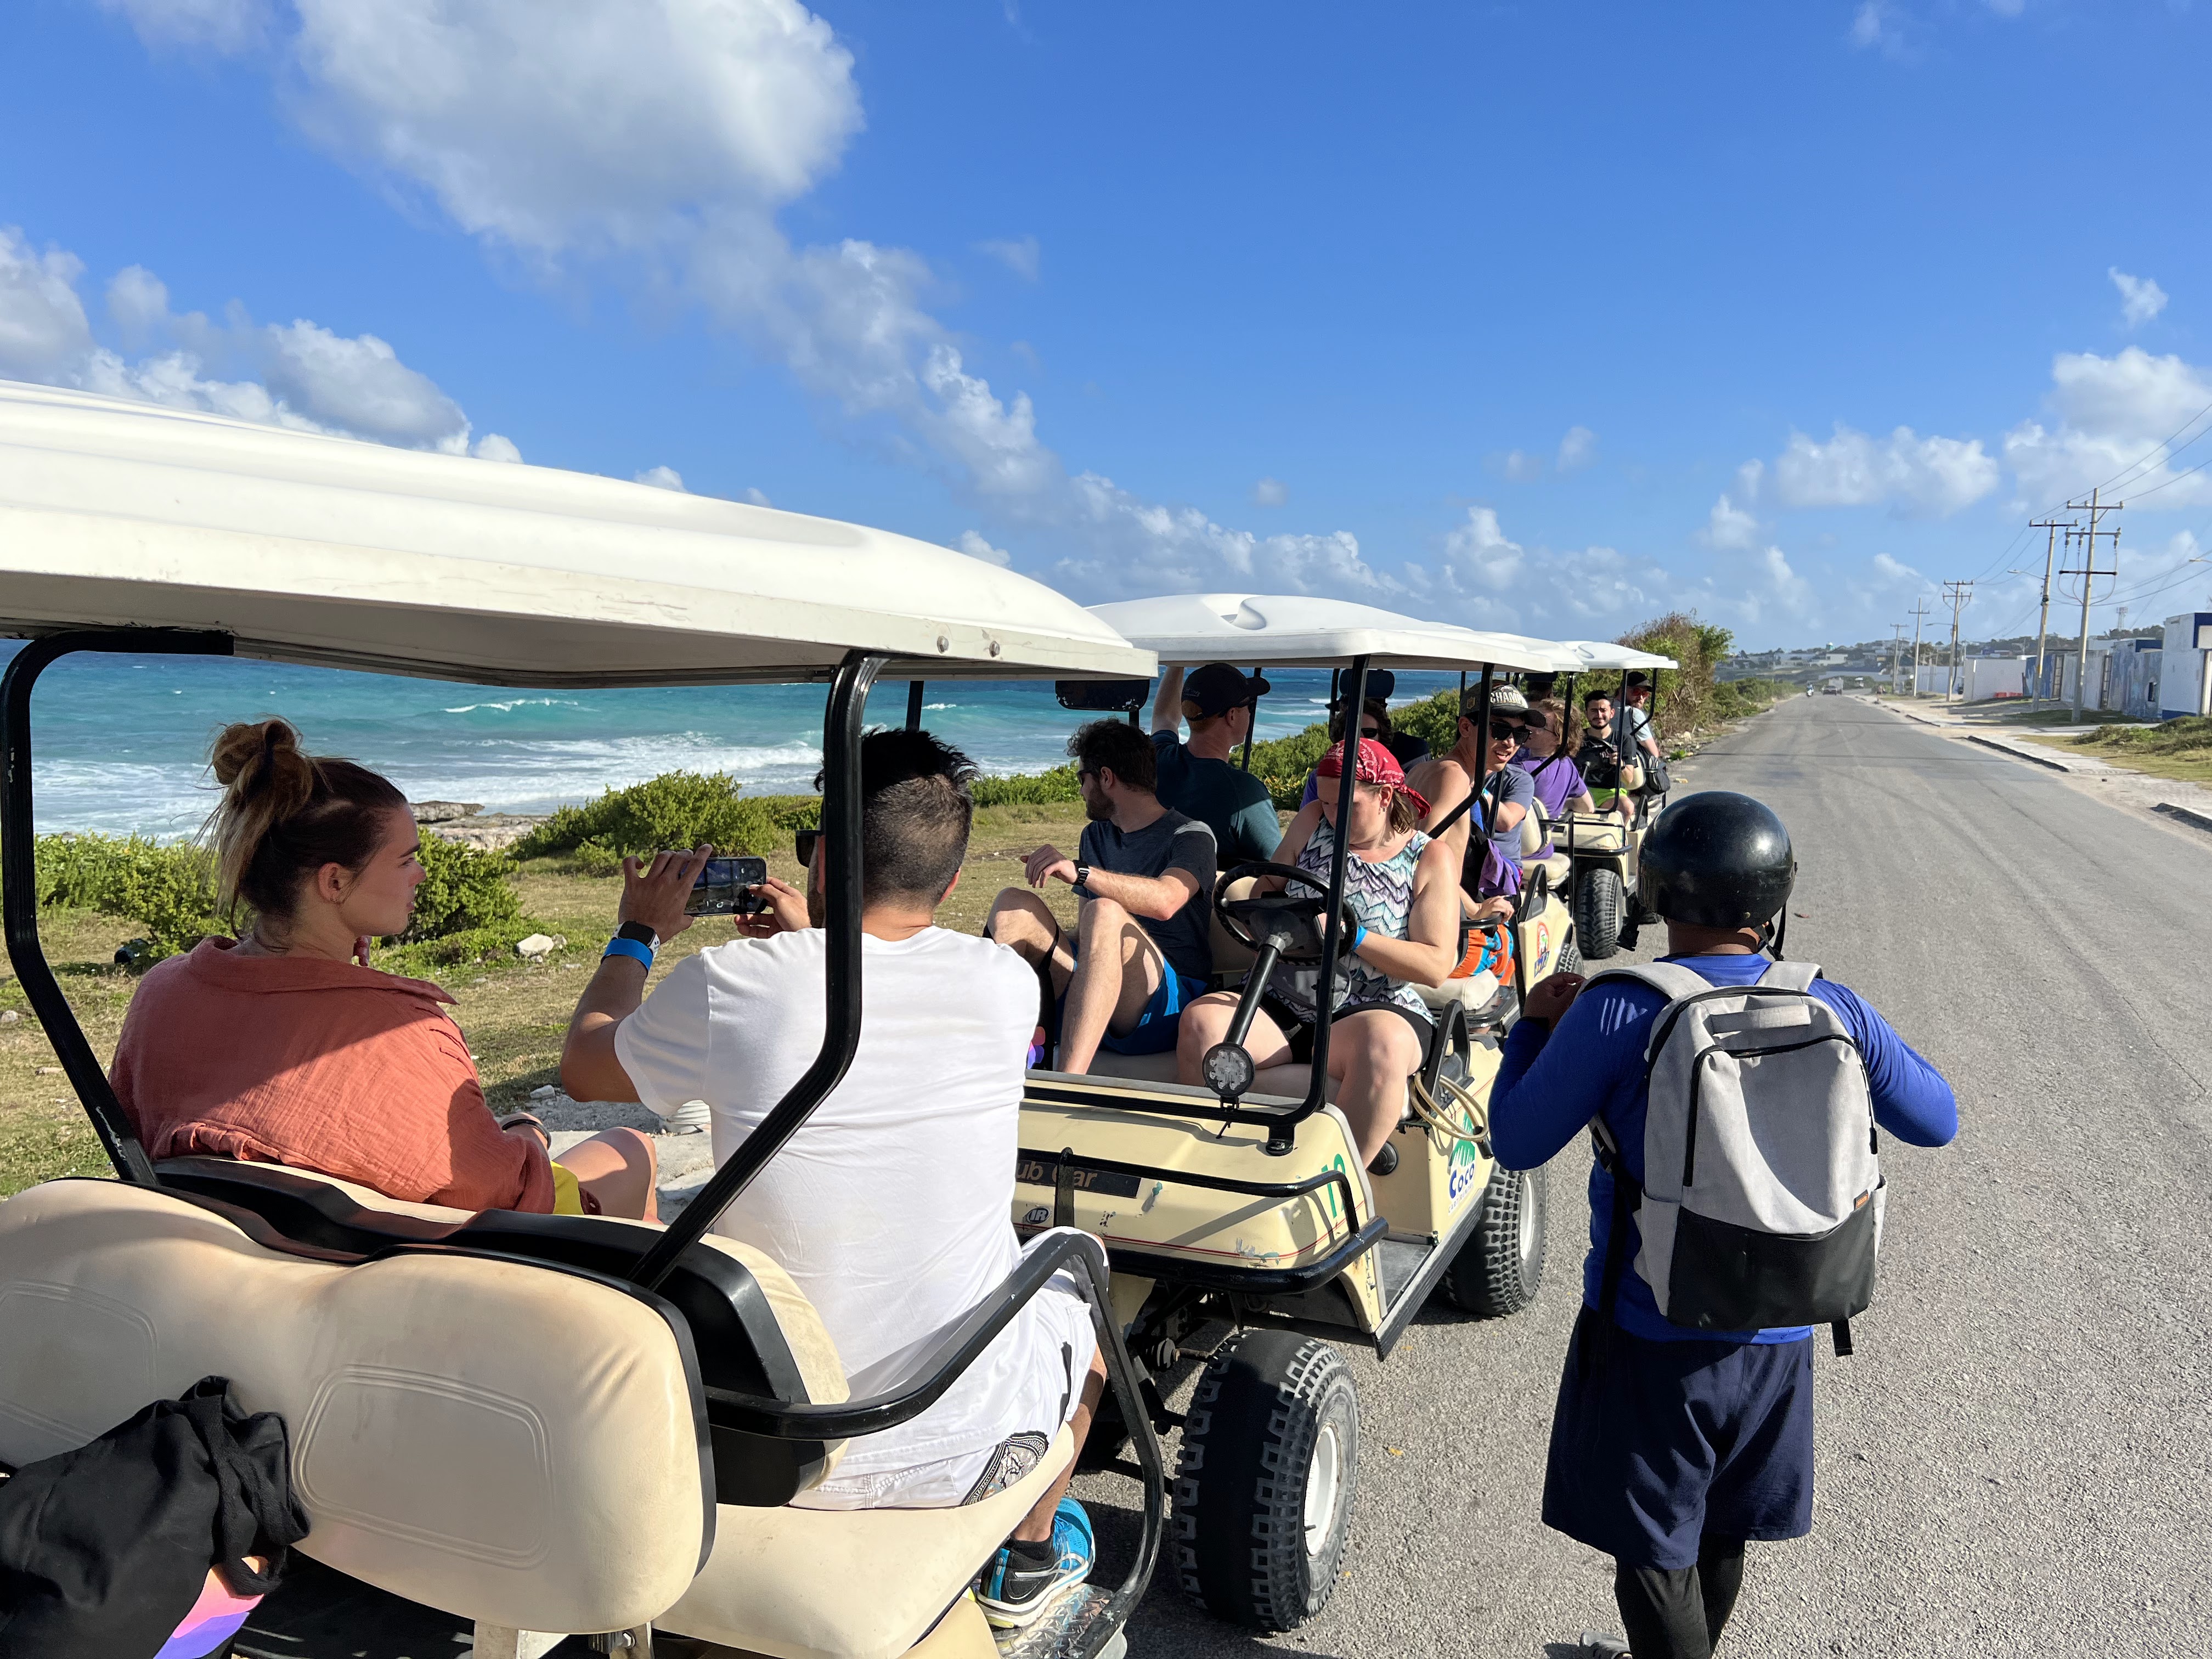 Our golf cart caravan going around the island